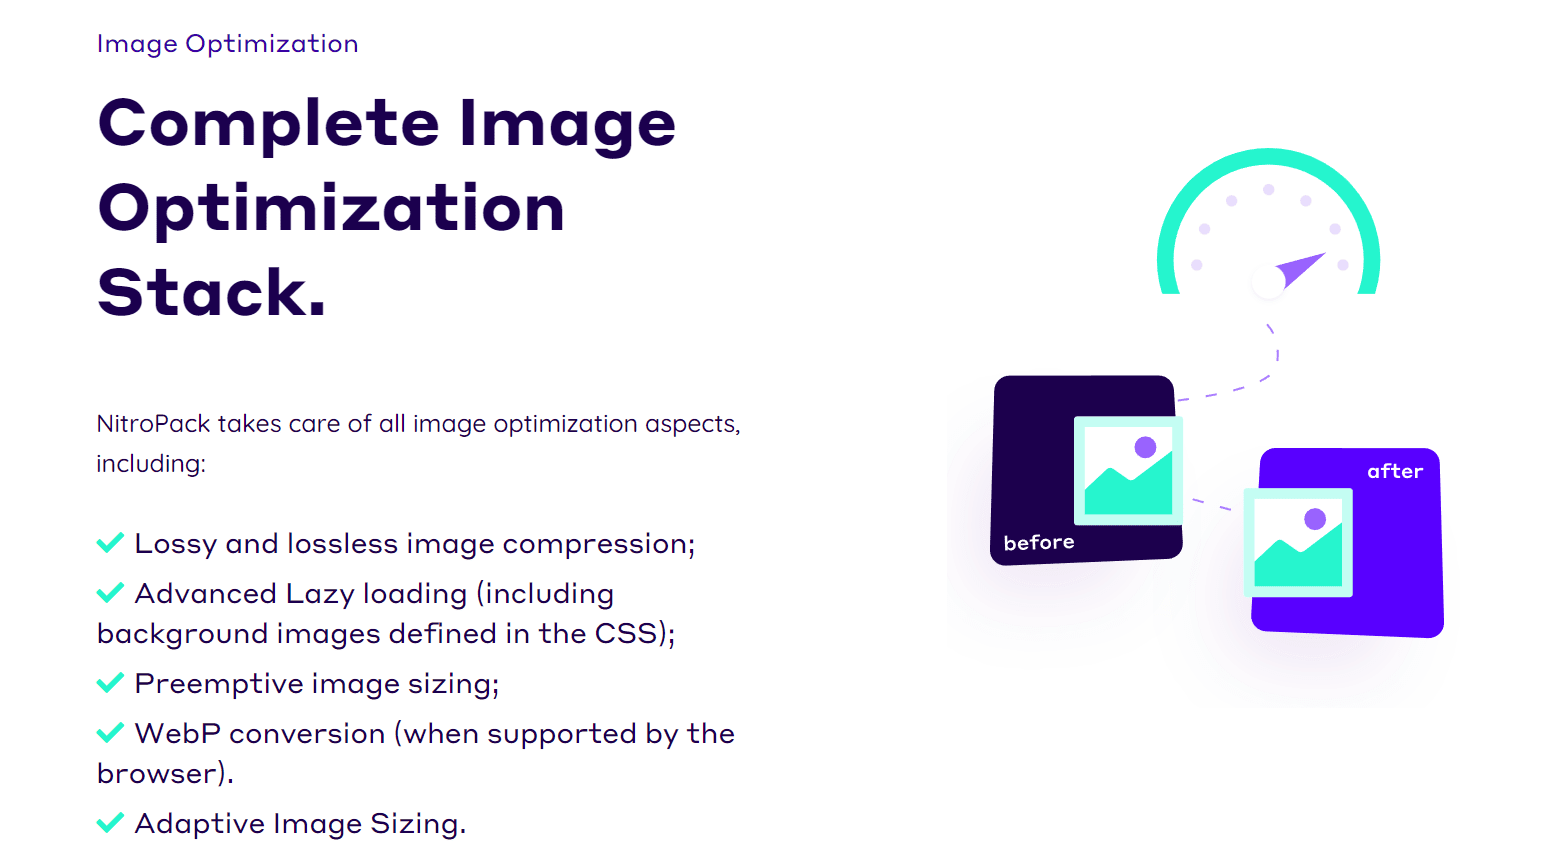 NitroPack Image Optimization Features